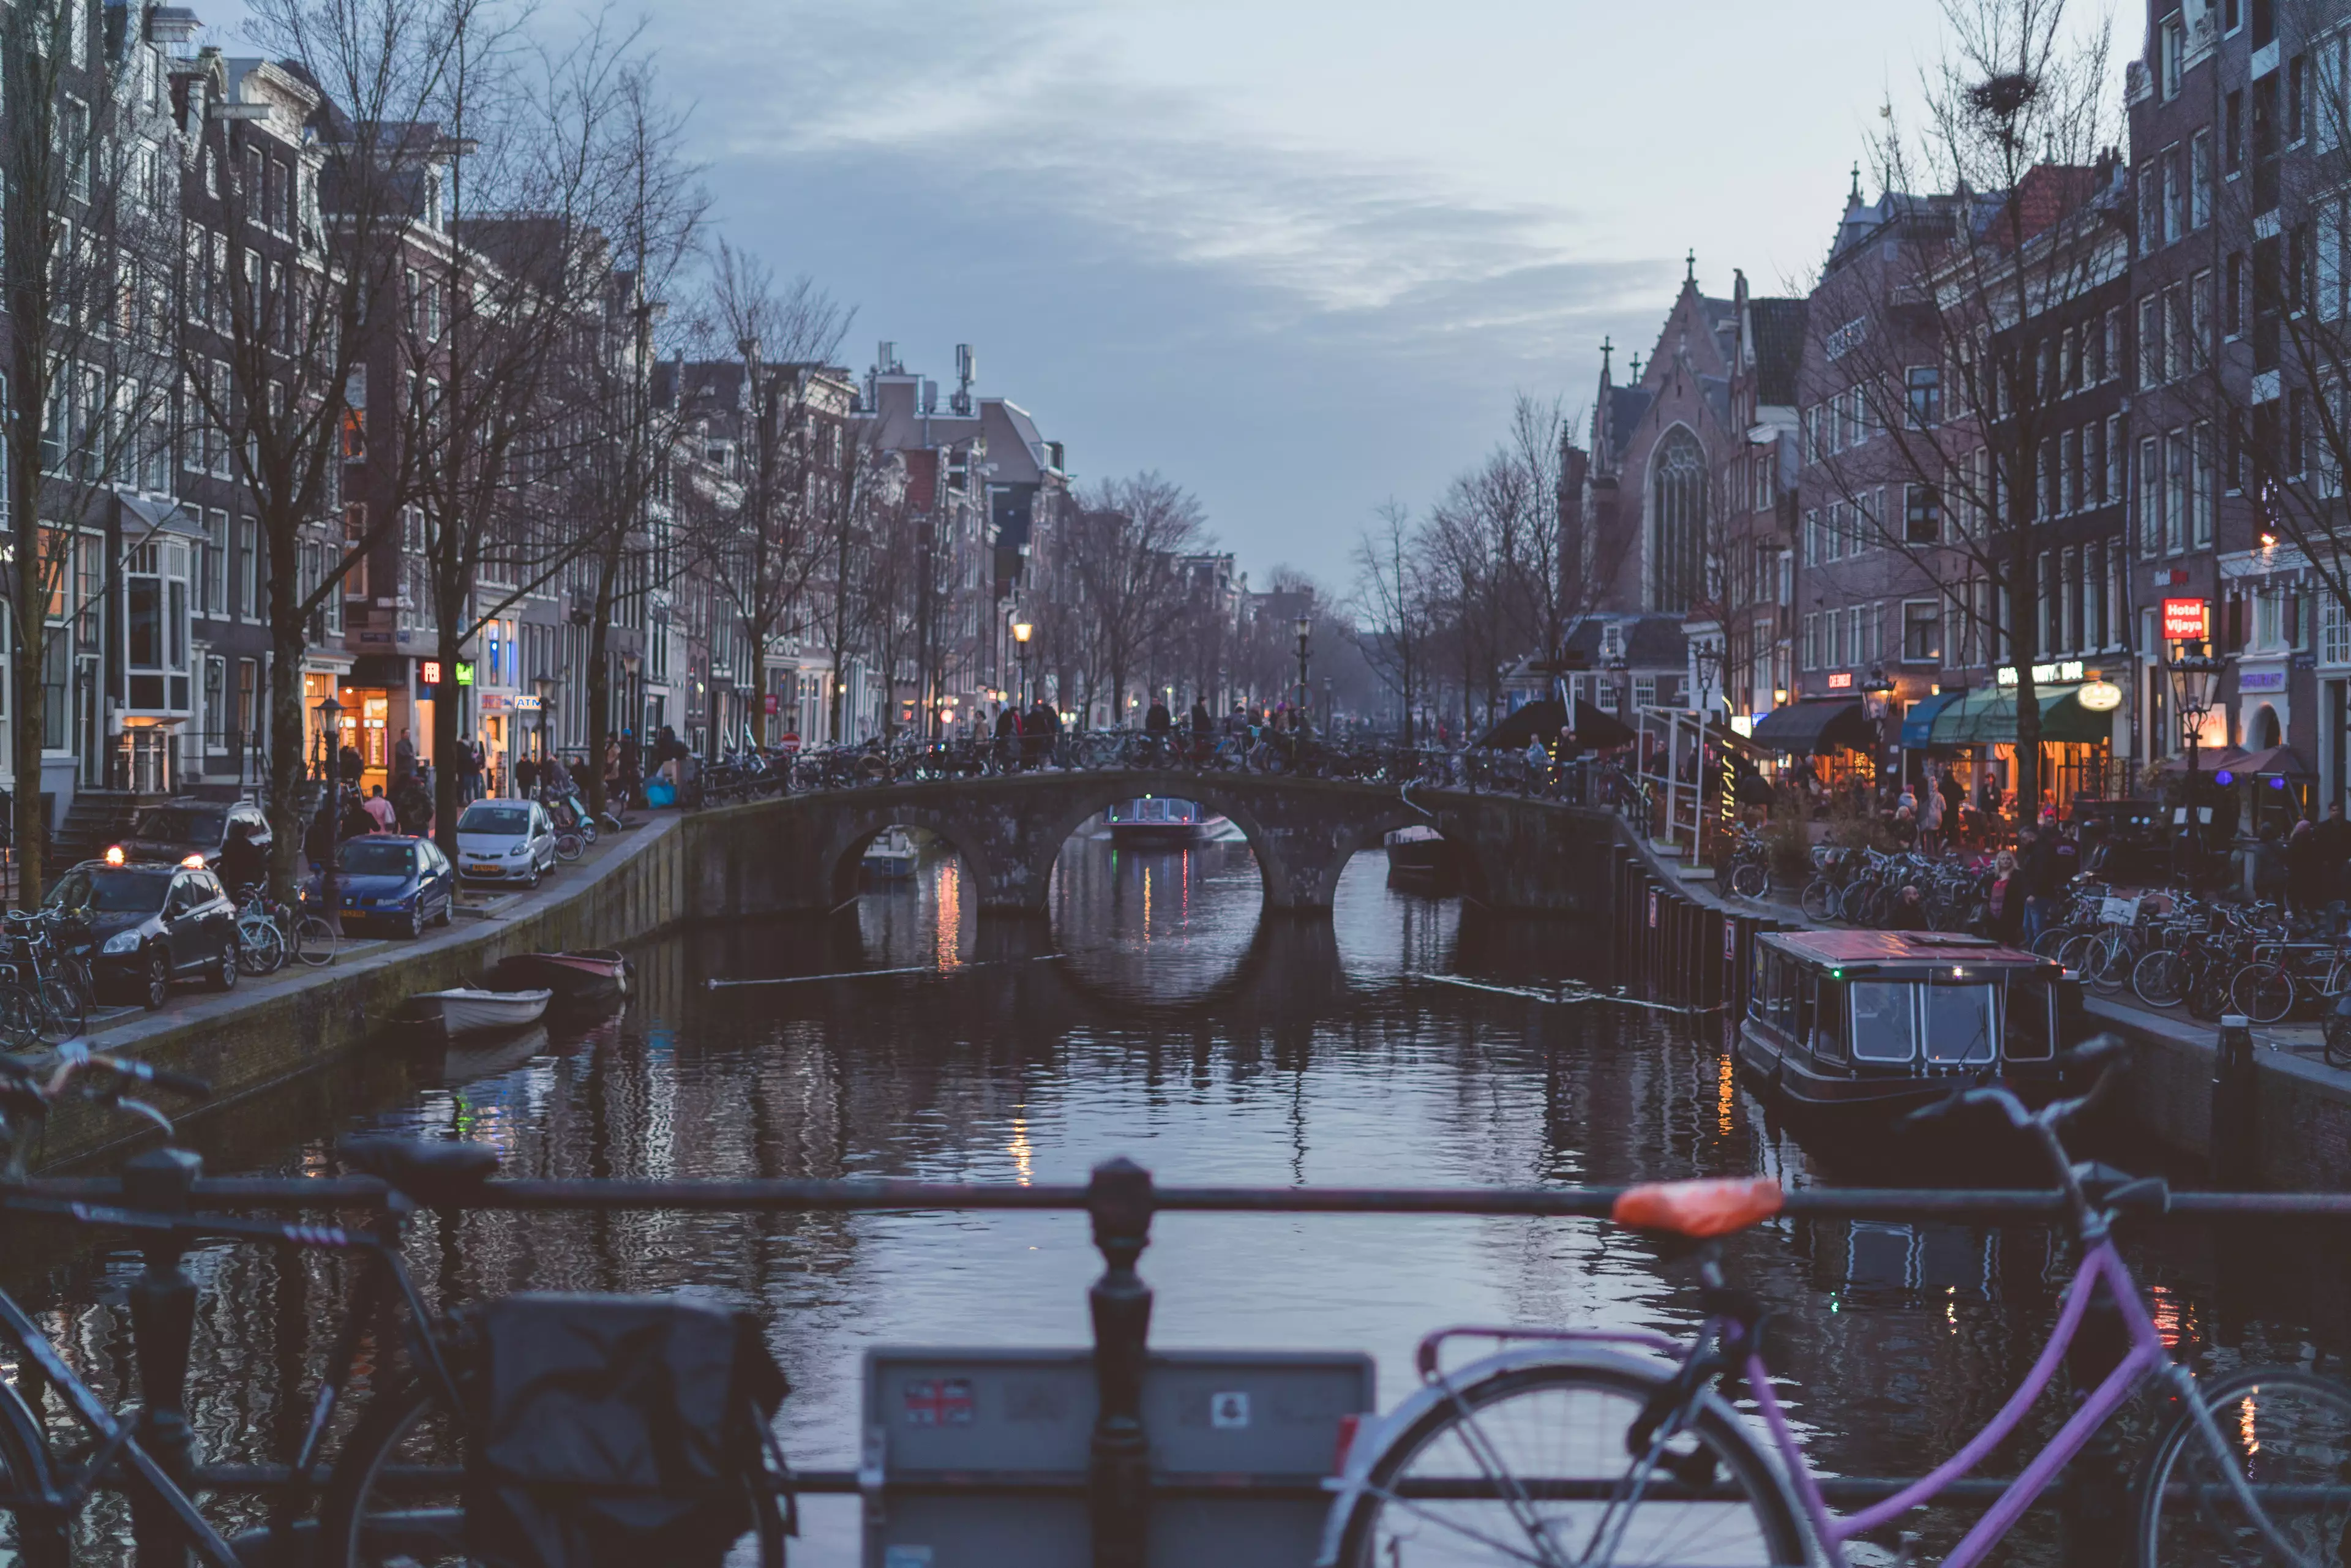 Trip to Amsterdam, anyone? (